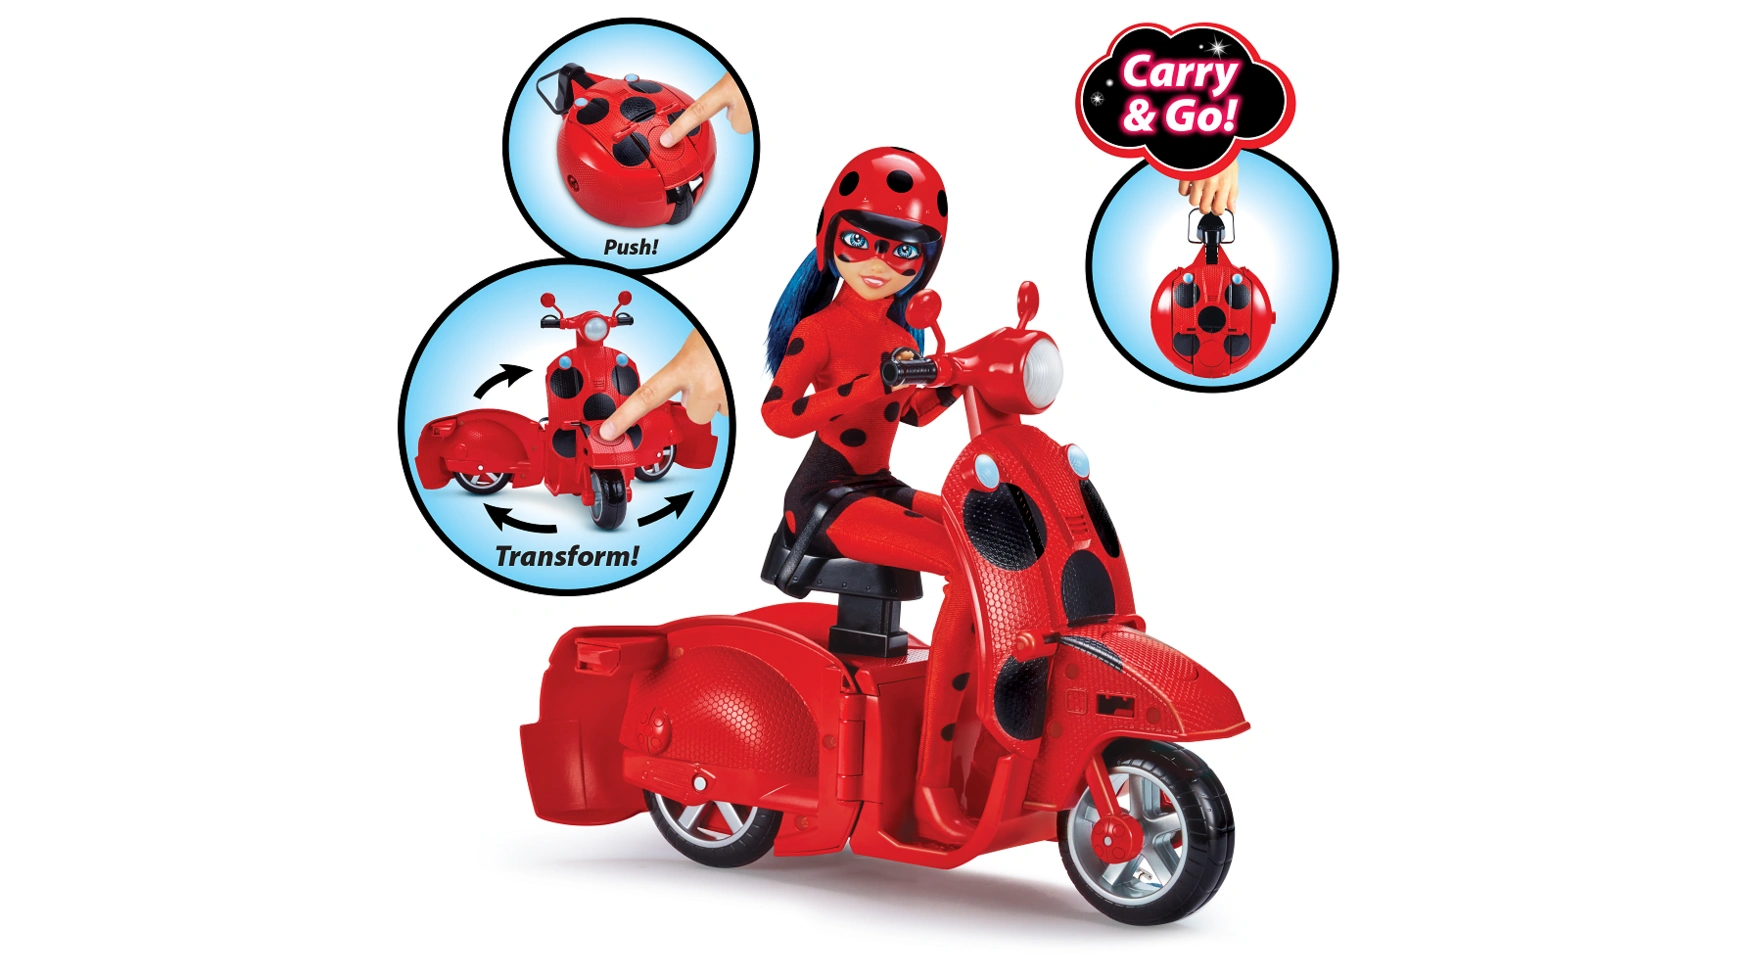 Bandai Чудесная кукла Божья коровка Lucky Charm со скутером Switch 'n go